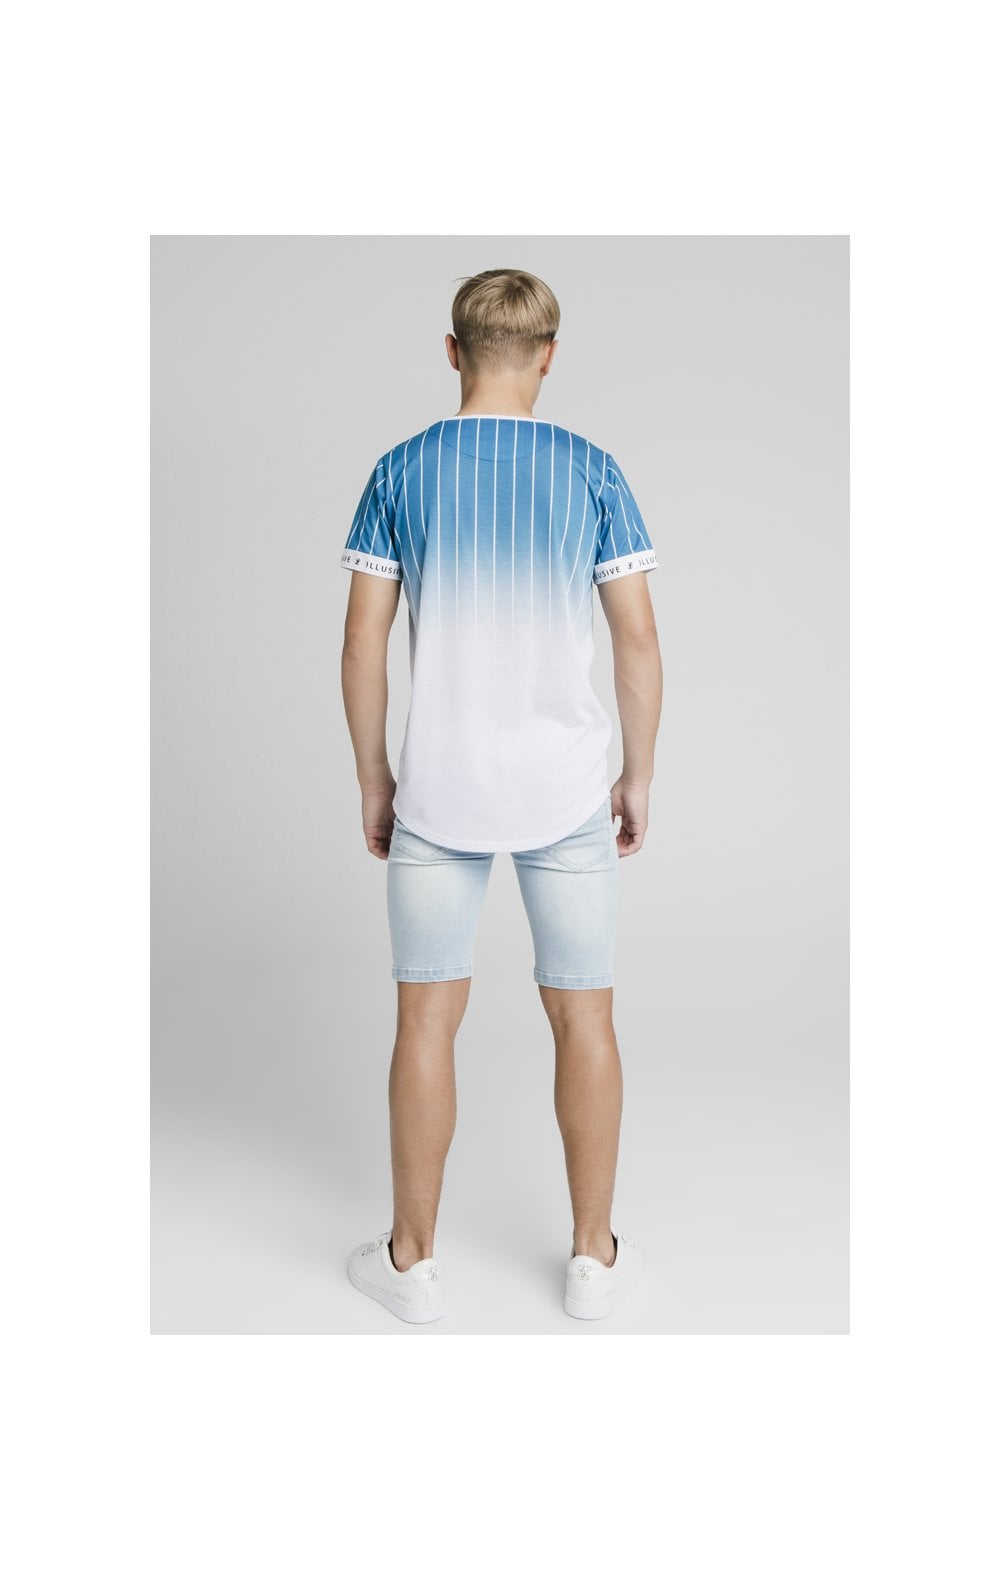 Illusive London Distressed Denim Shorts - Light Blue (7)